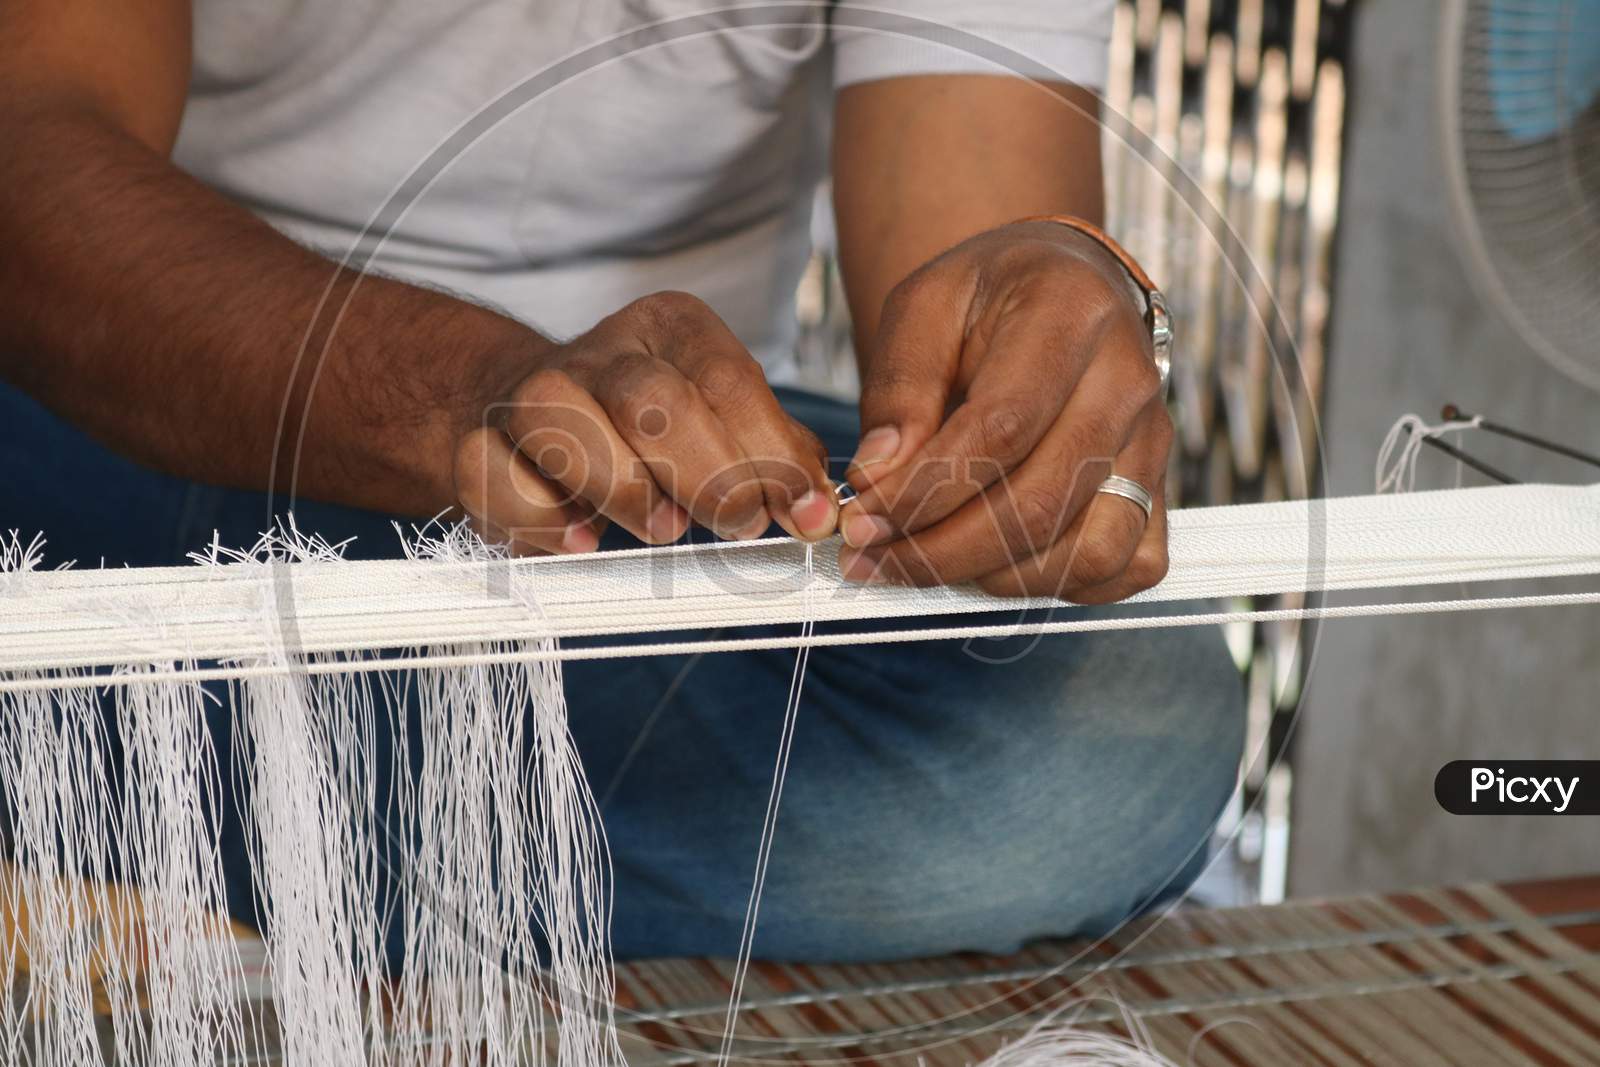 Handloom weaver in India working in his loom.